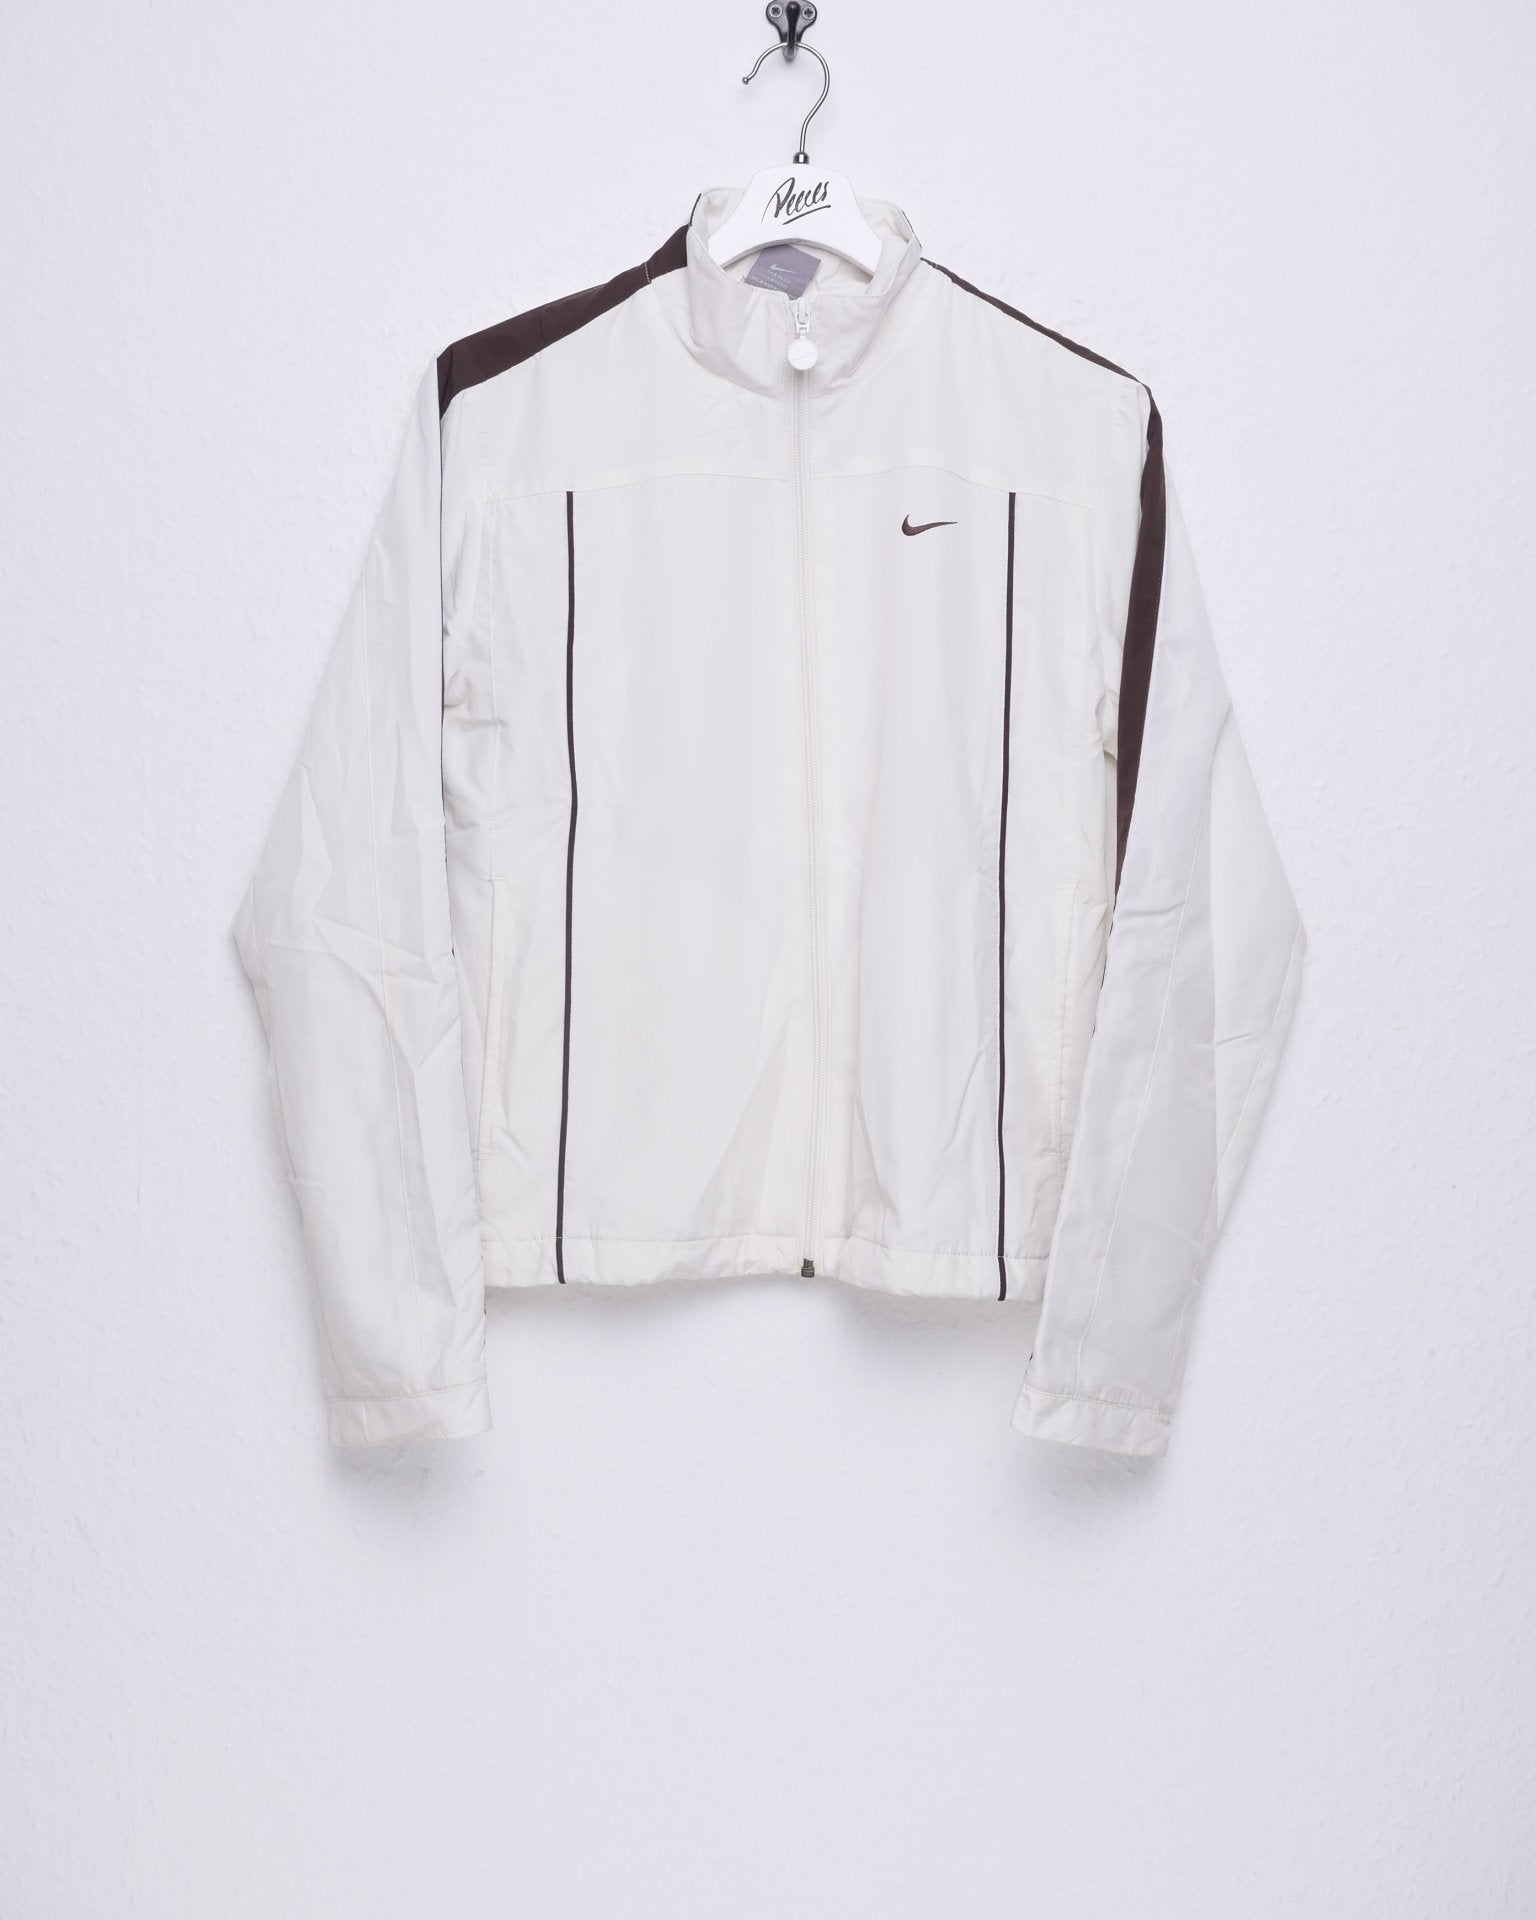 Nike embroidered Logo white Track Jacke - Peeces